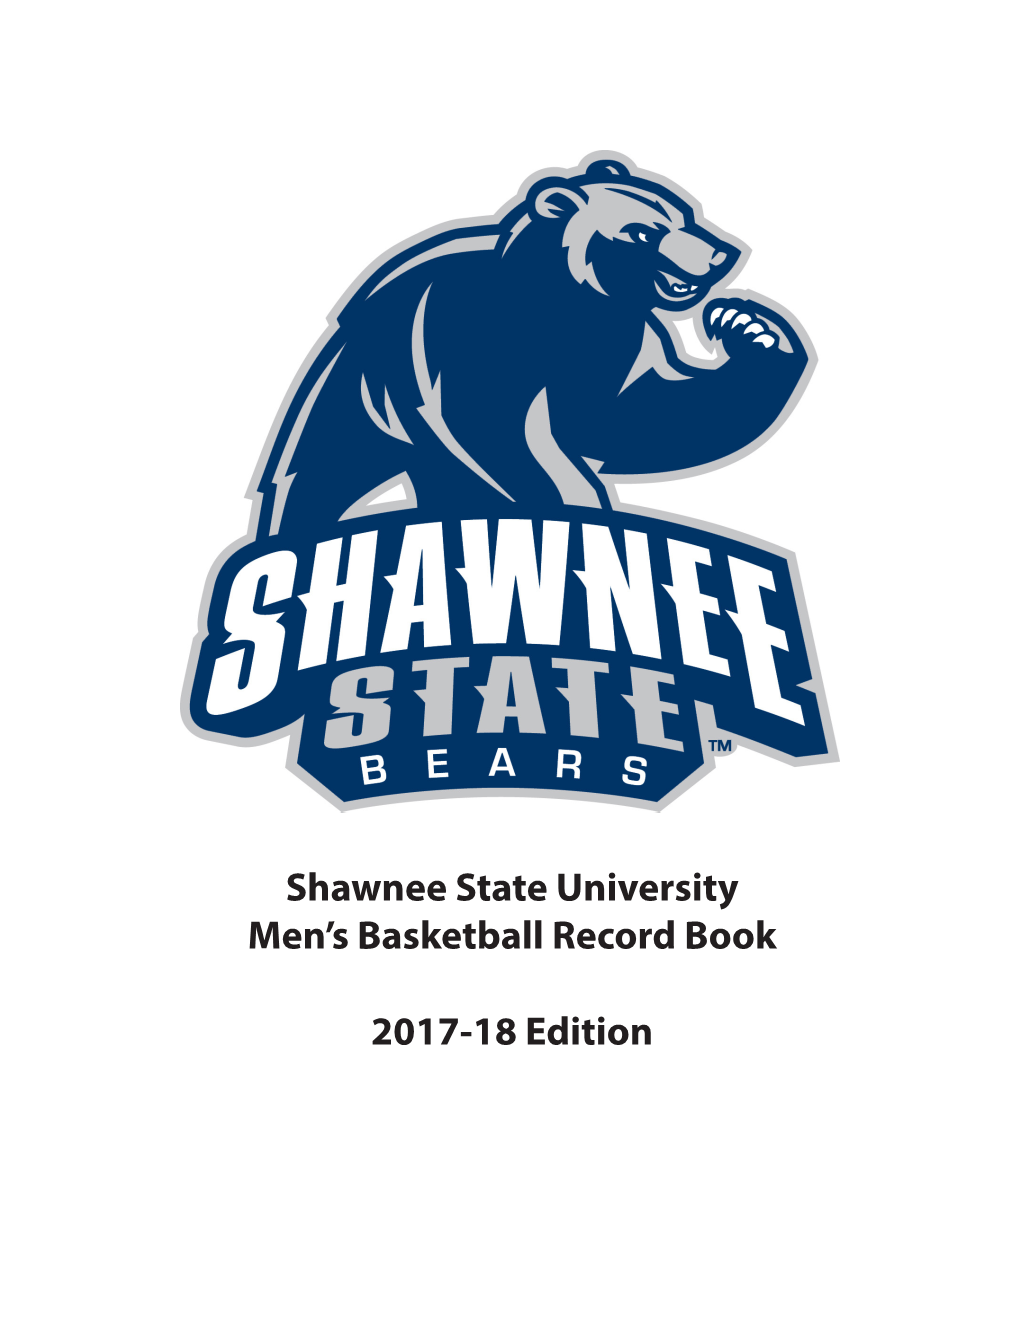 Shawnee State University Men's Basketball Record Book 2017-18